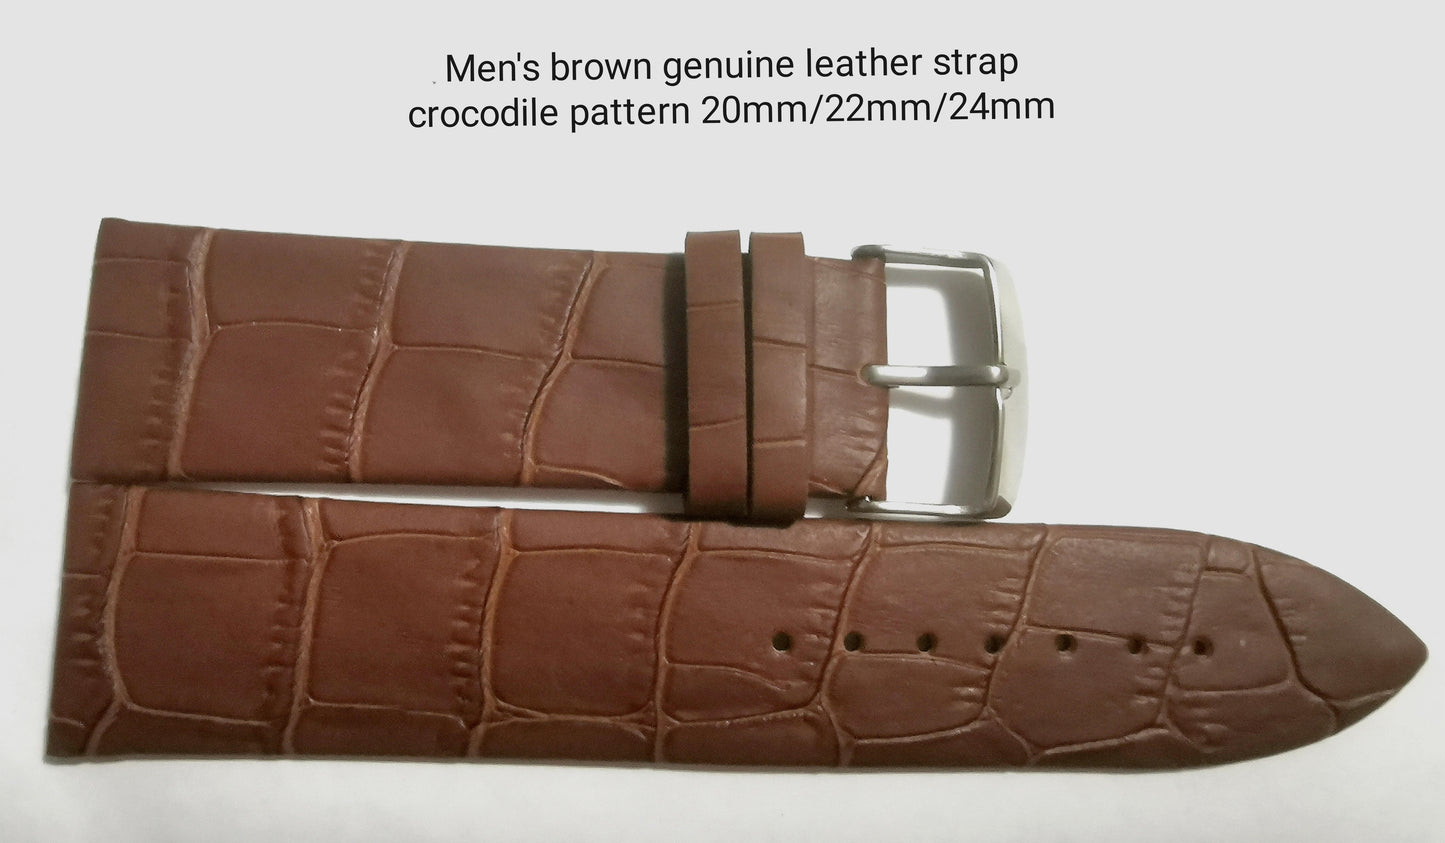 Men's brown genuine leather crocodile pattern strap 20mm/22mm/24mm